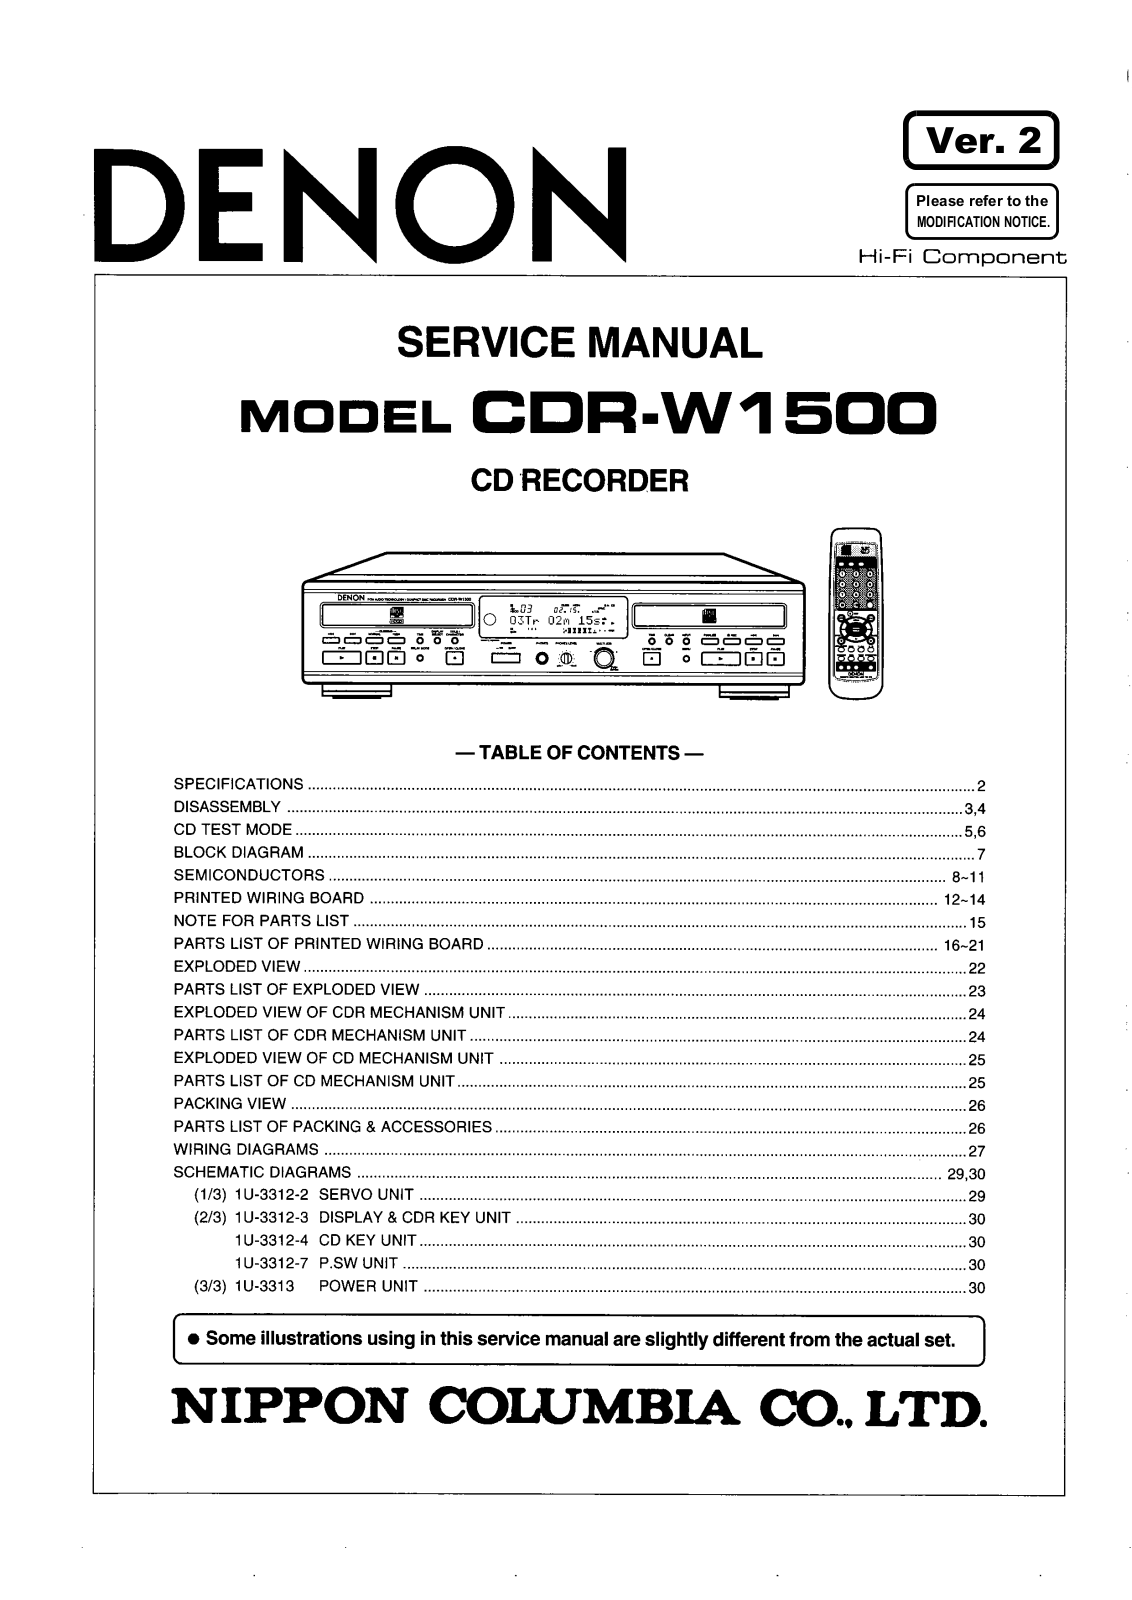 Denon CDR-W1500 Service Manual